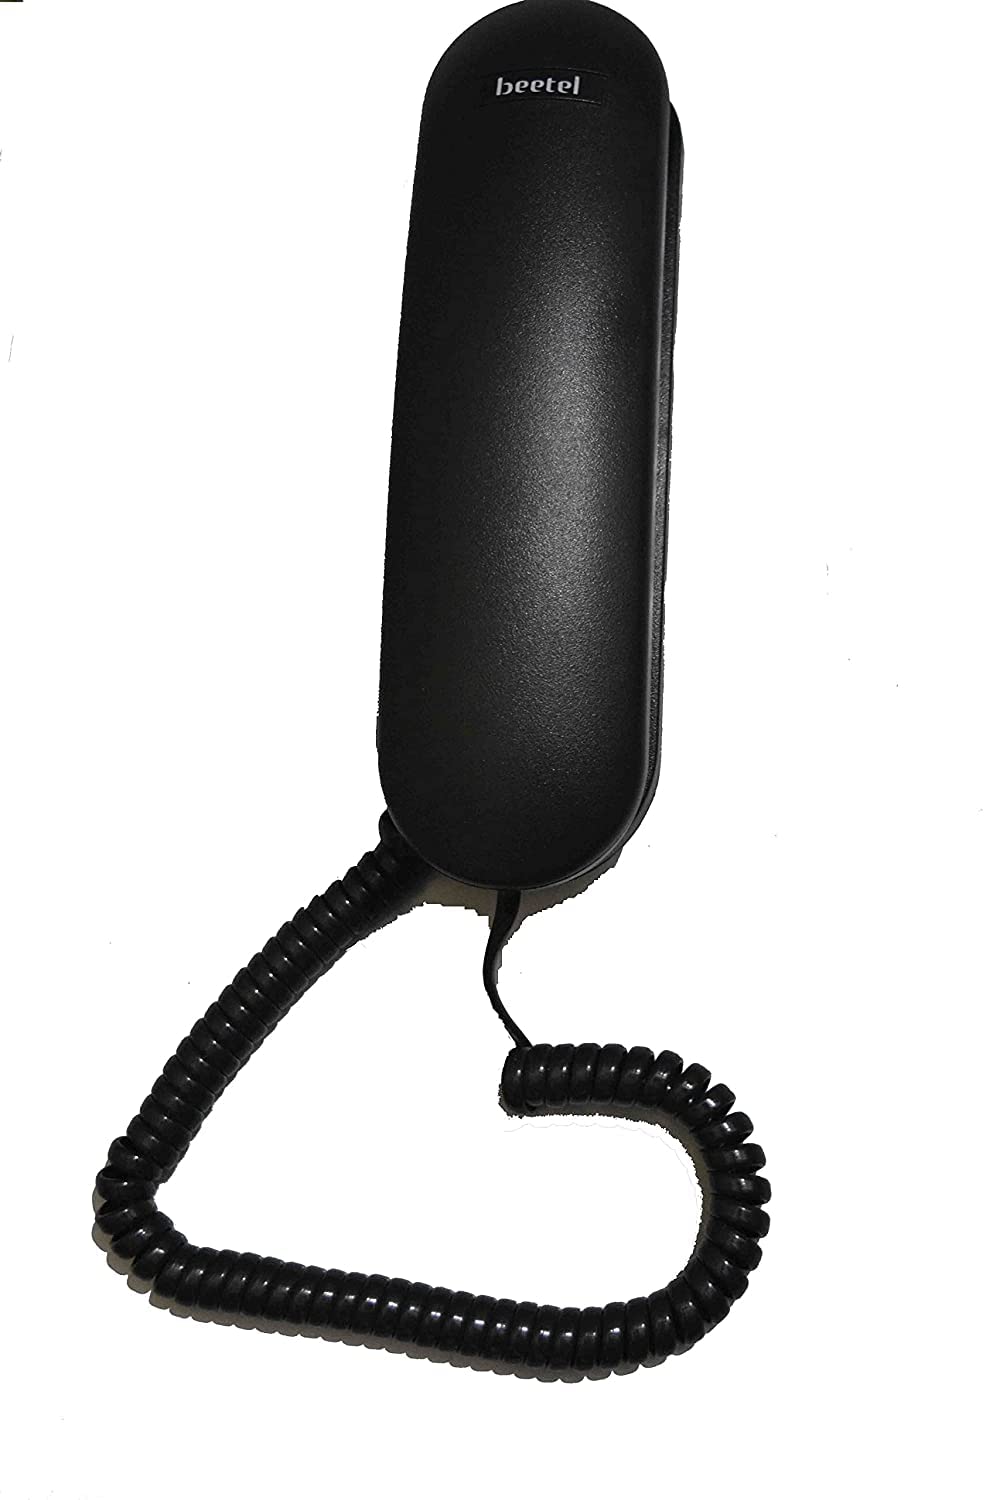 Beetel B25 Corded Wall Mounting Phone Black-Corded Wall Mounting Phone Black-dealsplant